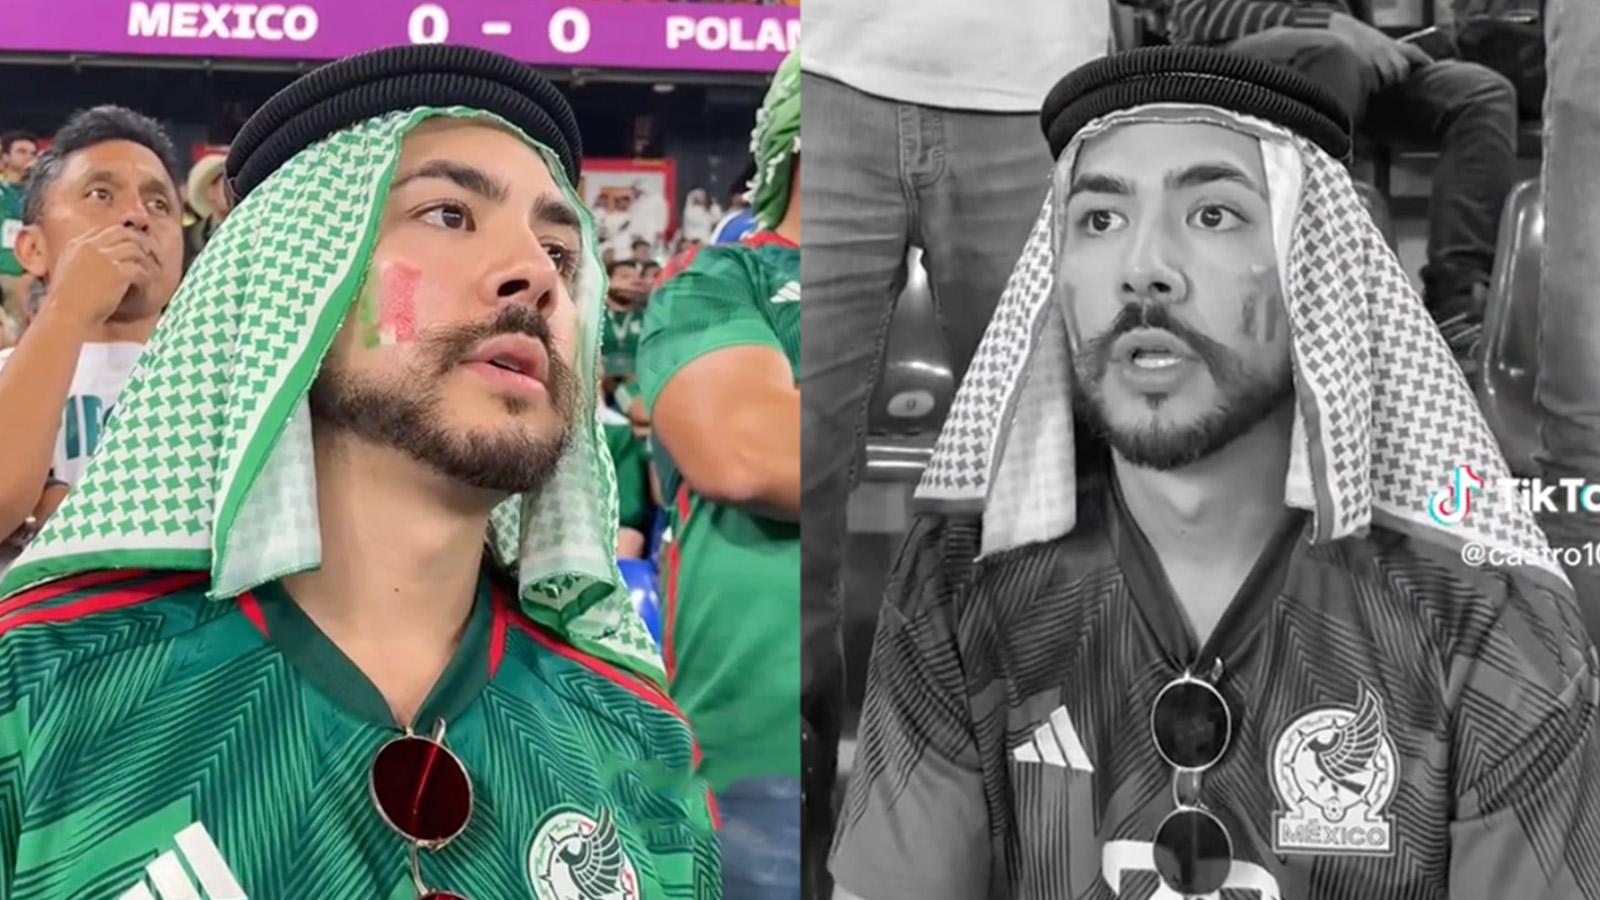 Castro watching Mexico vs Poland